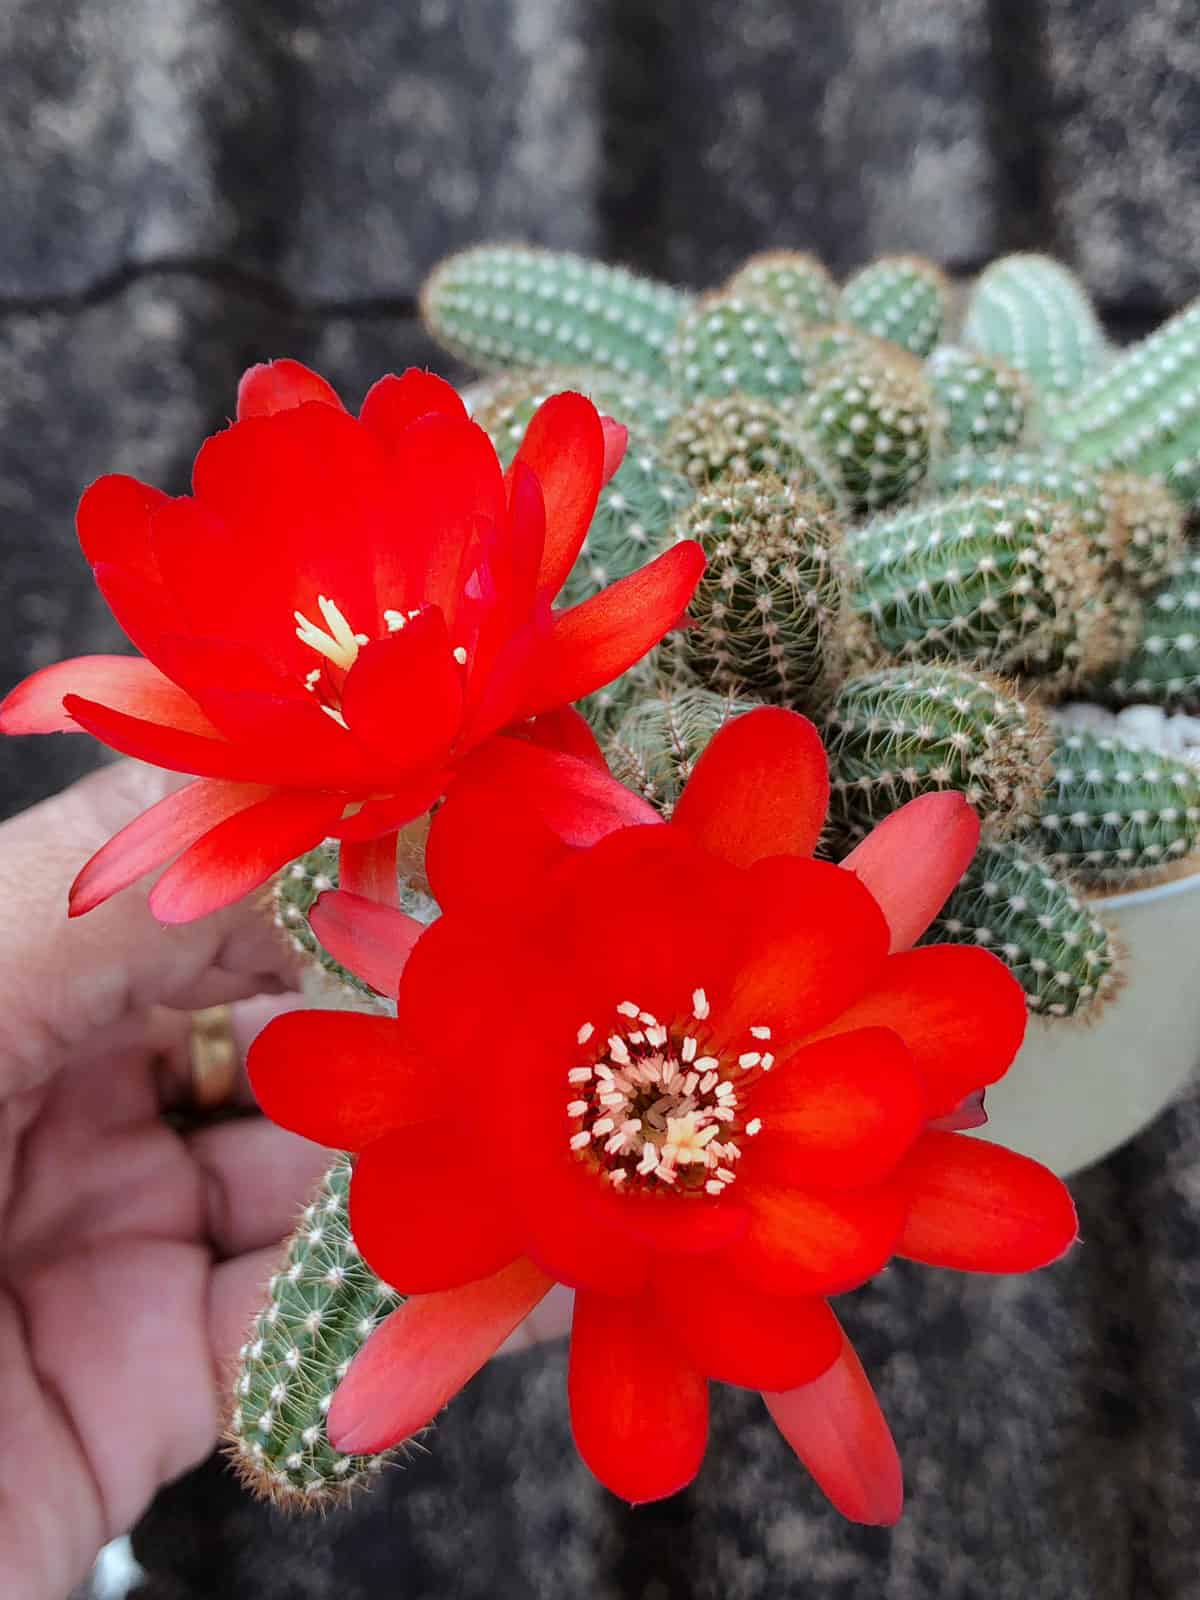 Blooming bright red petals of a Scarlet Hedgehog Cactus 